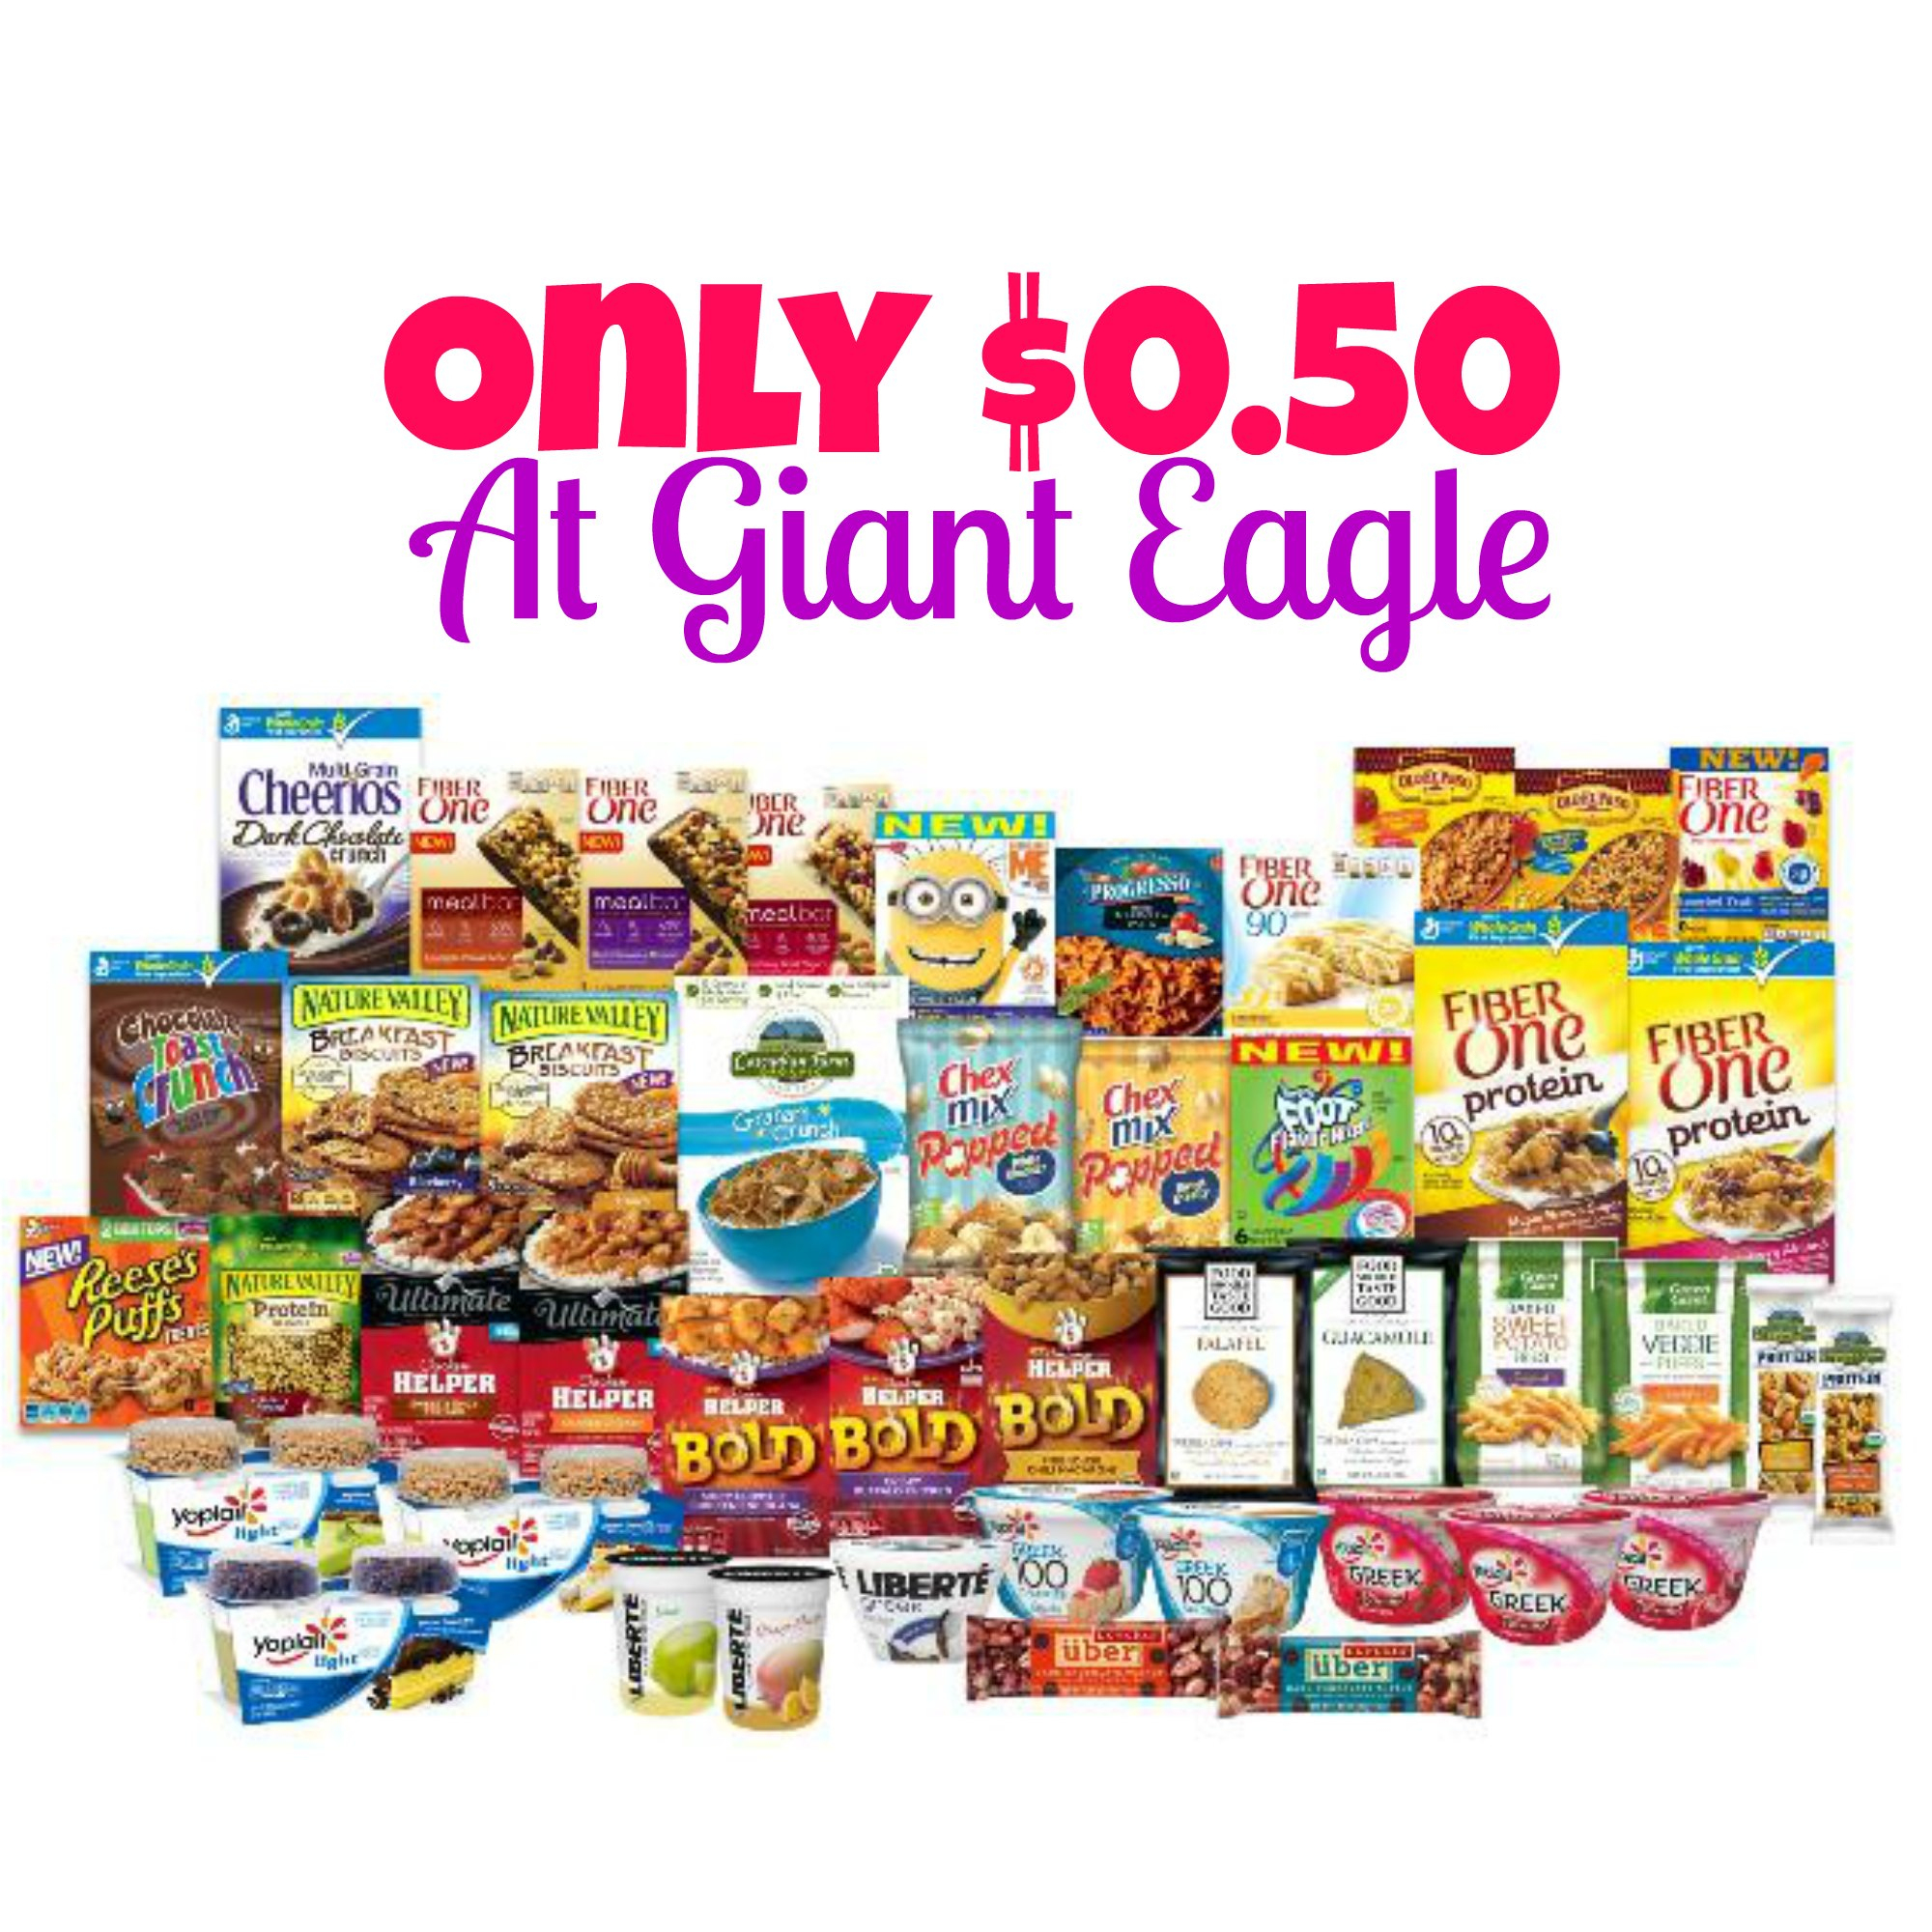 giant eagle app free item